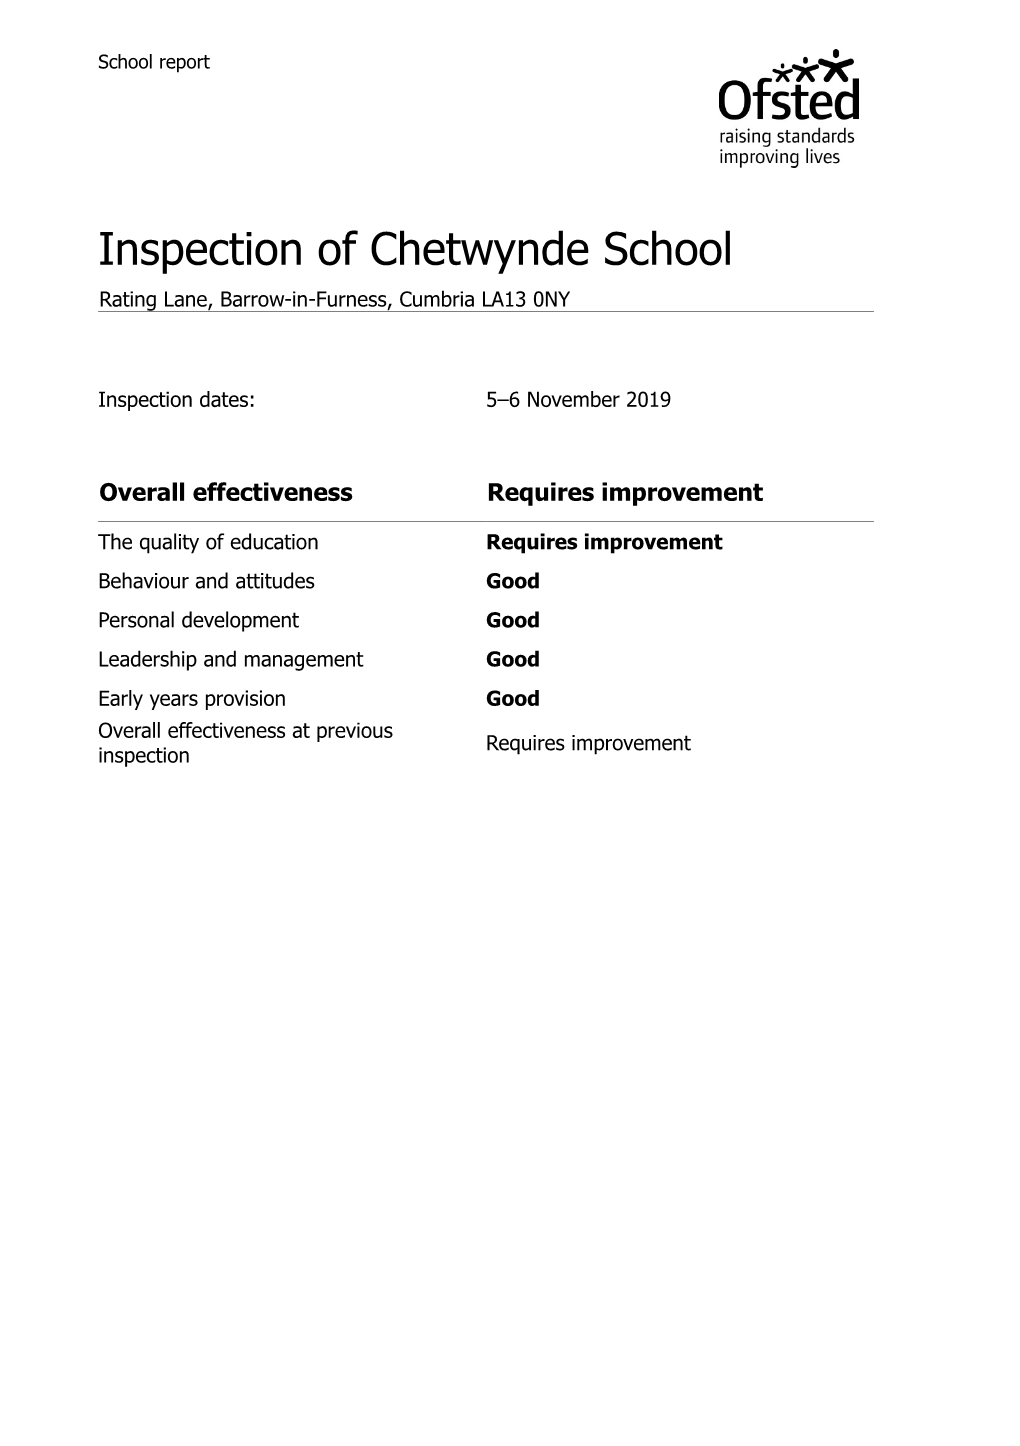 Inspection of Chetwynde School Rating Lane, Barrow-In-Furness, Cumbria LA13 0NY